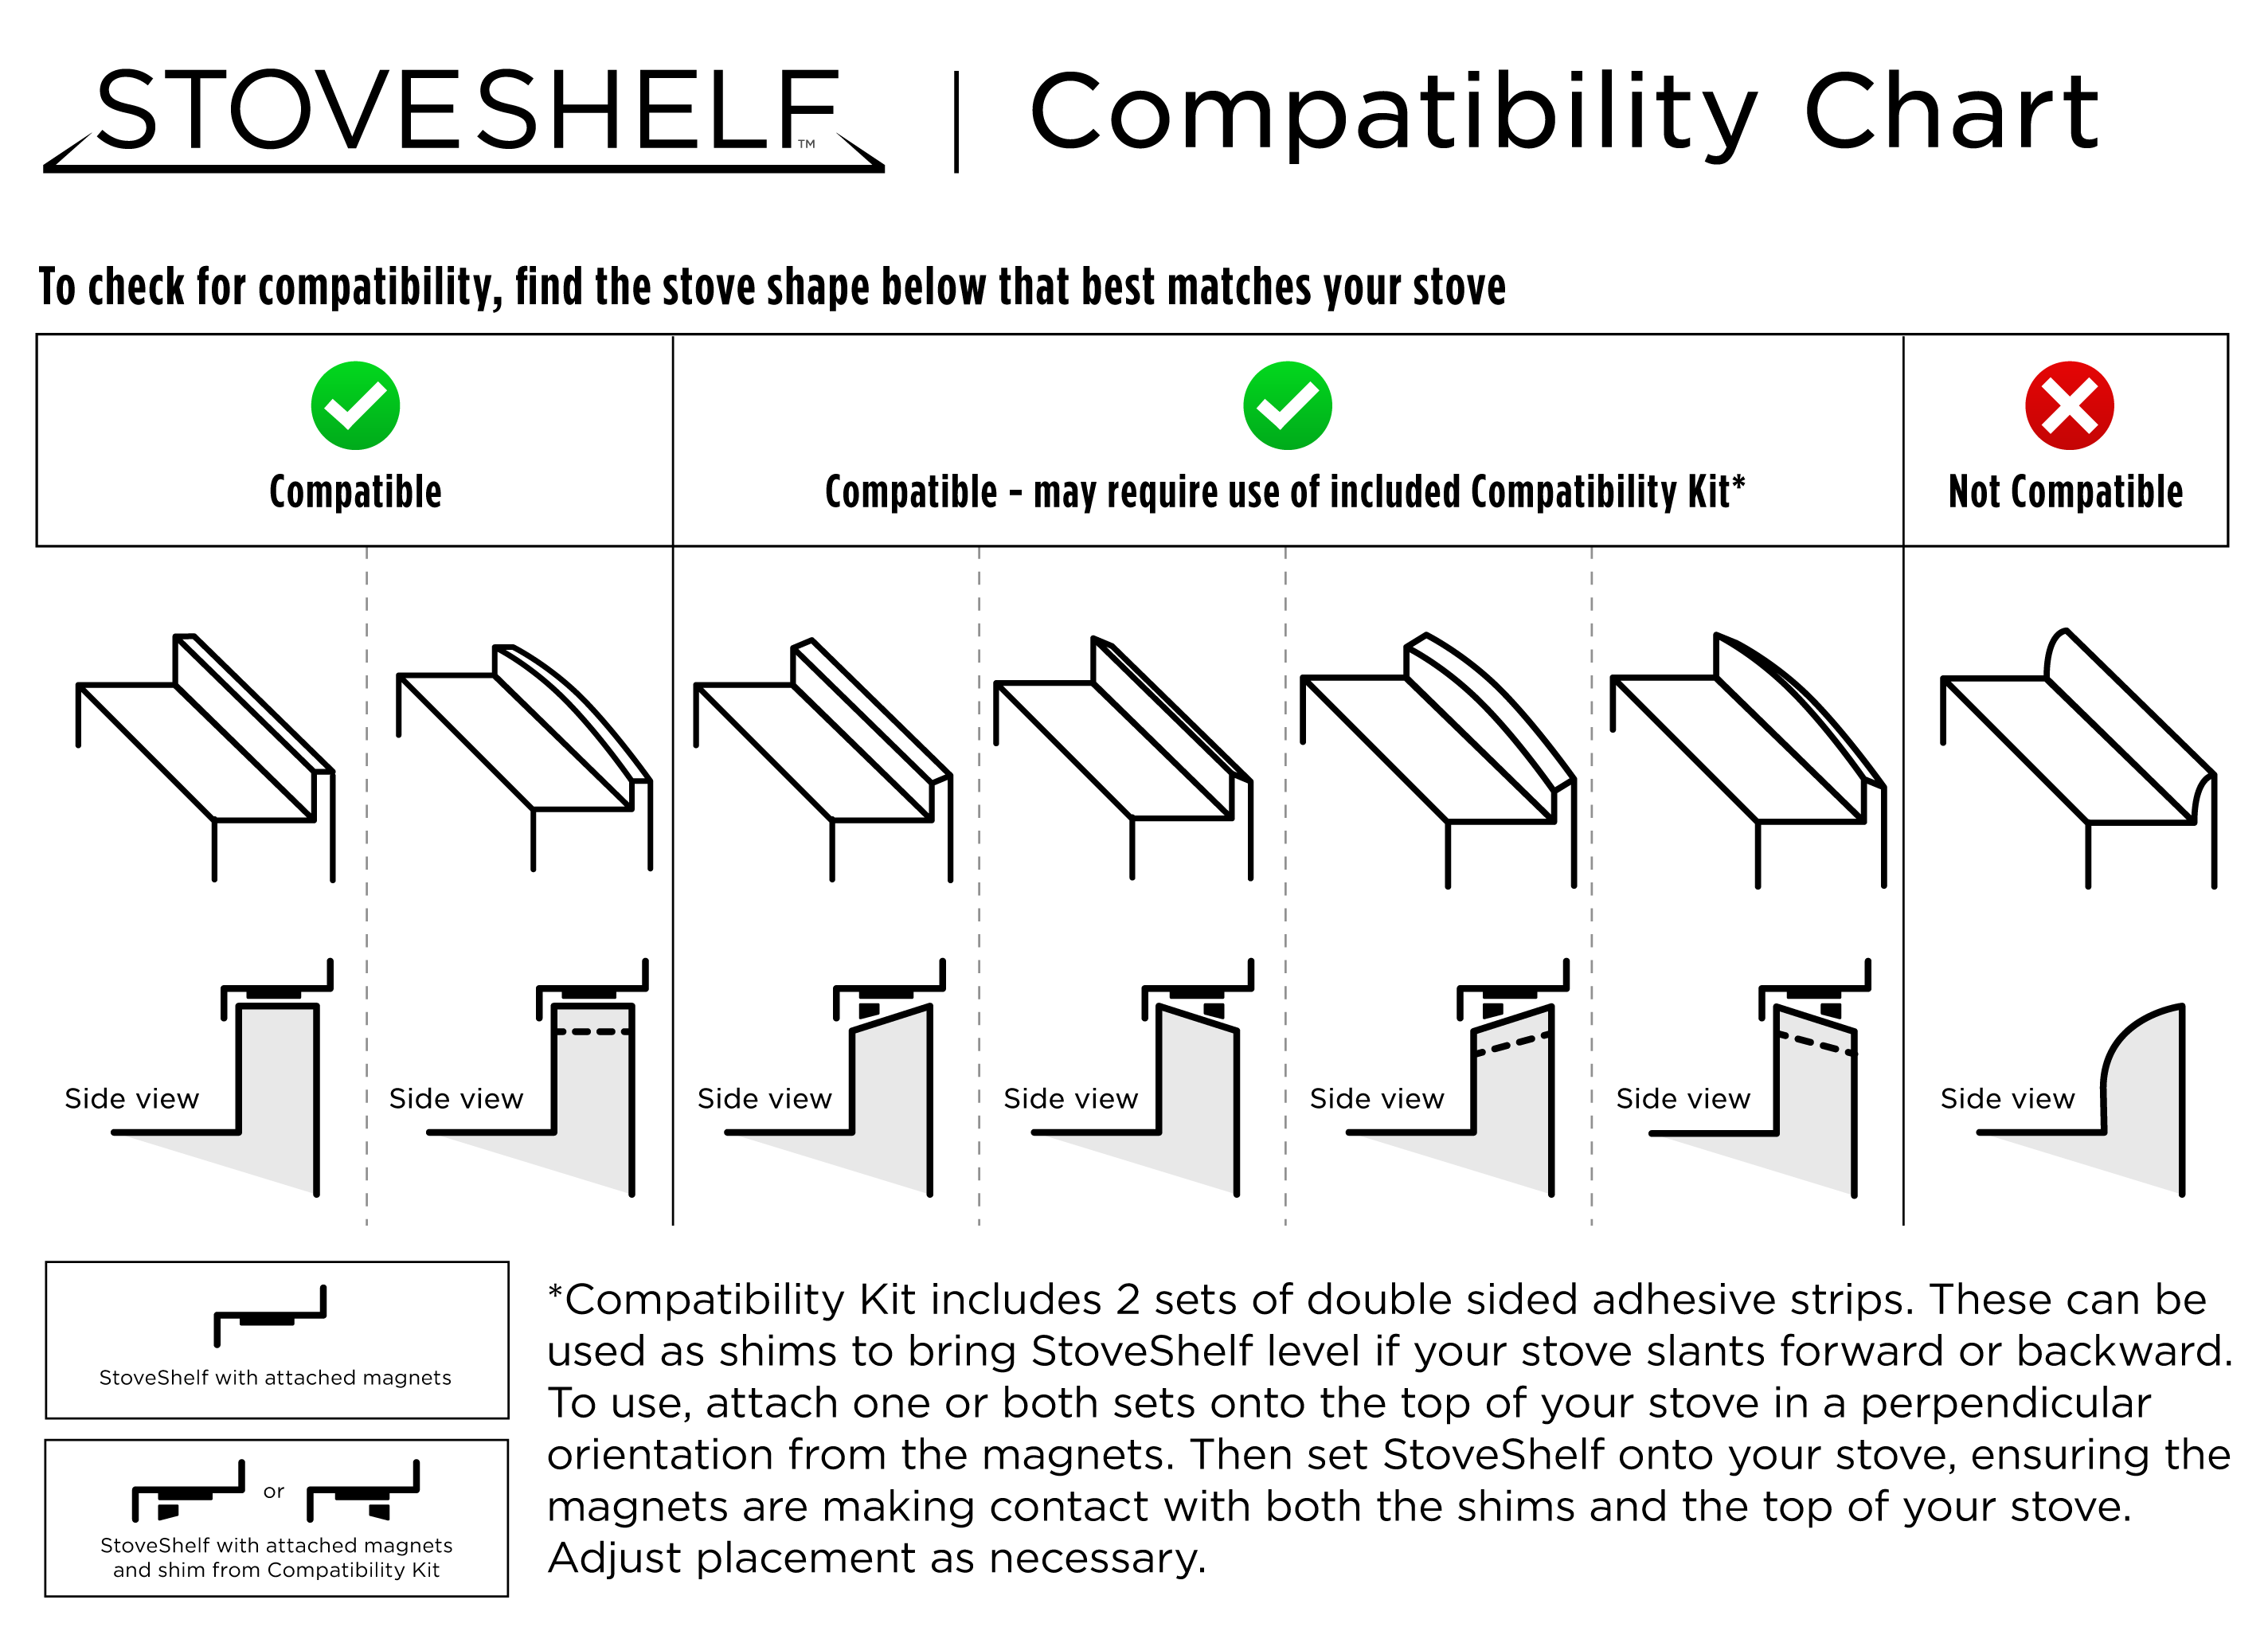 SS-Compatibility-Graphic-update-1-15-24-v8.png__PID:0b0922fe-eec1-4505-84de-5148a8e95e18